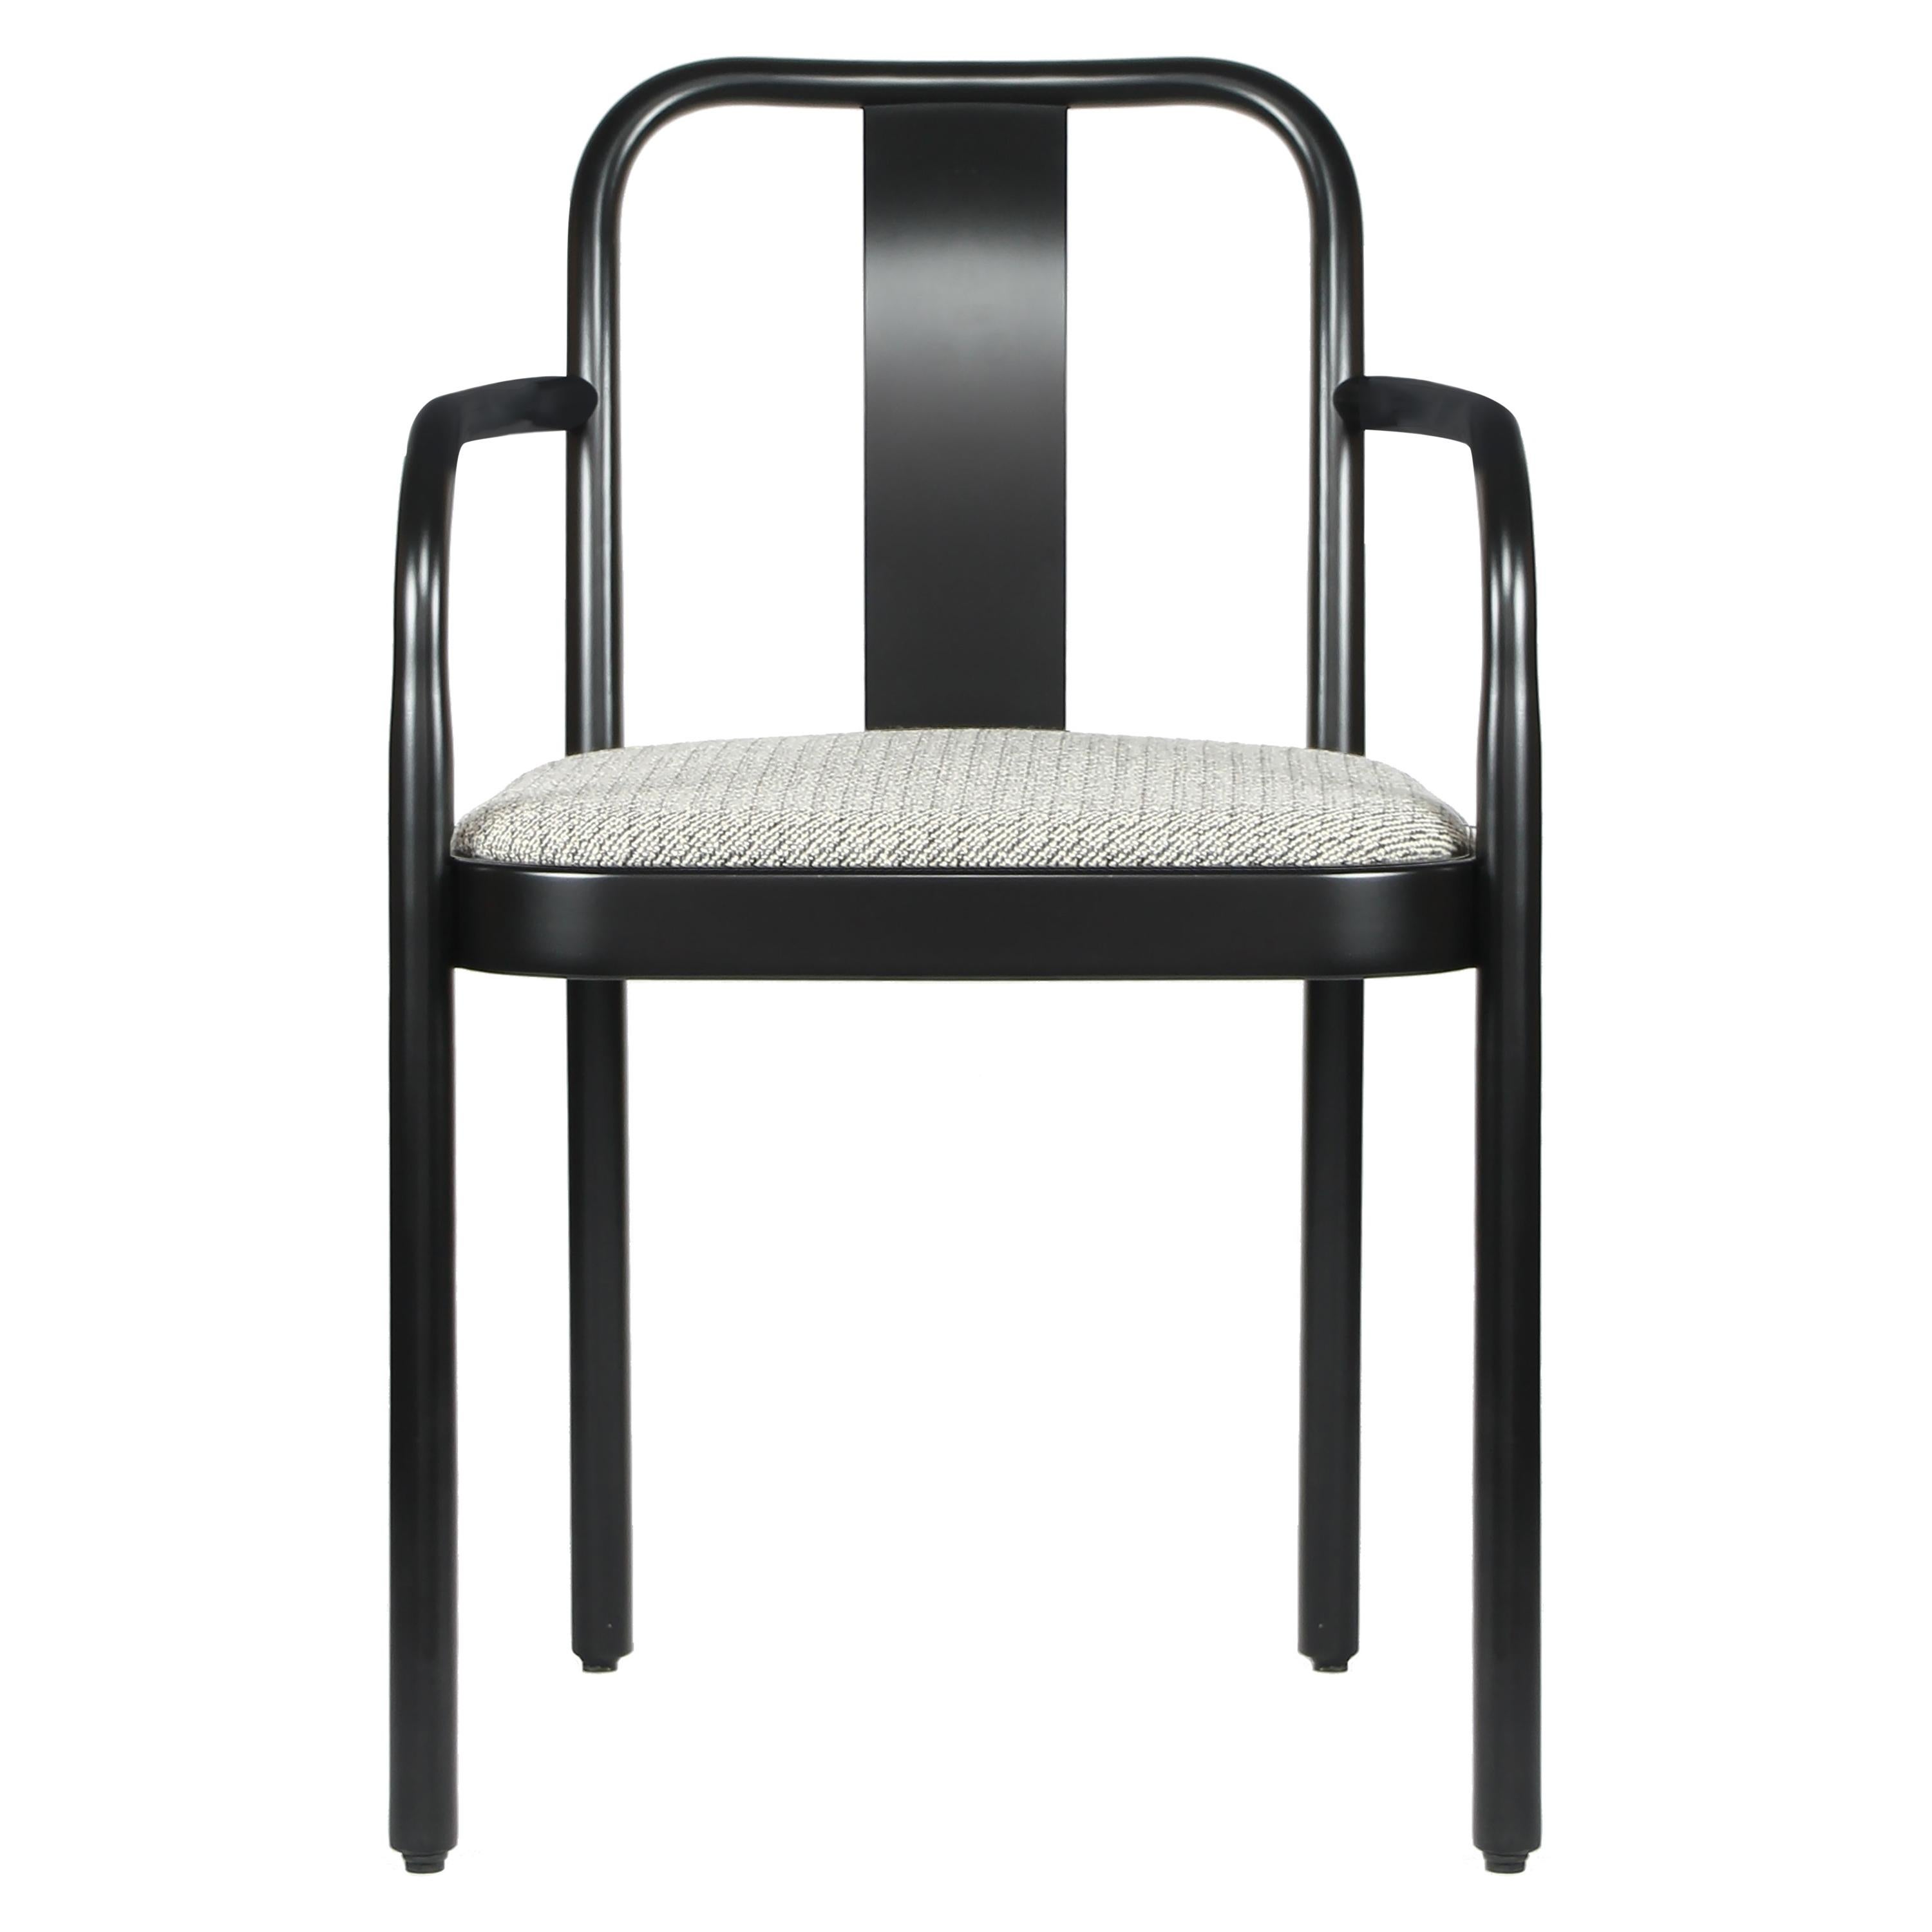 Gebrüder Thonet Vienna GmbH Sugiloo Chair with Armrest & Upholsterd Seat For Sale